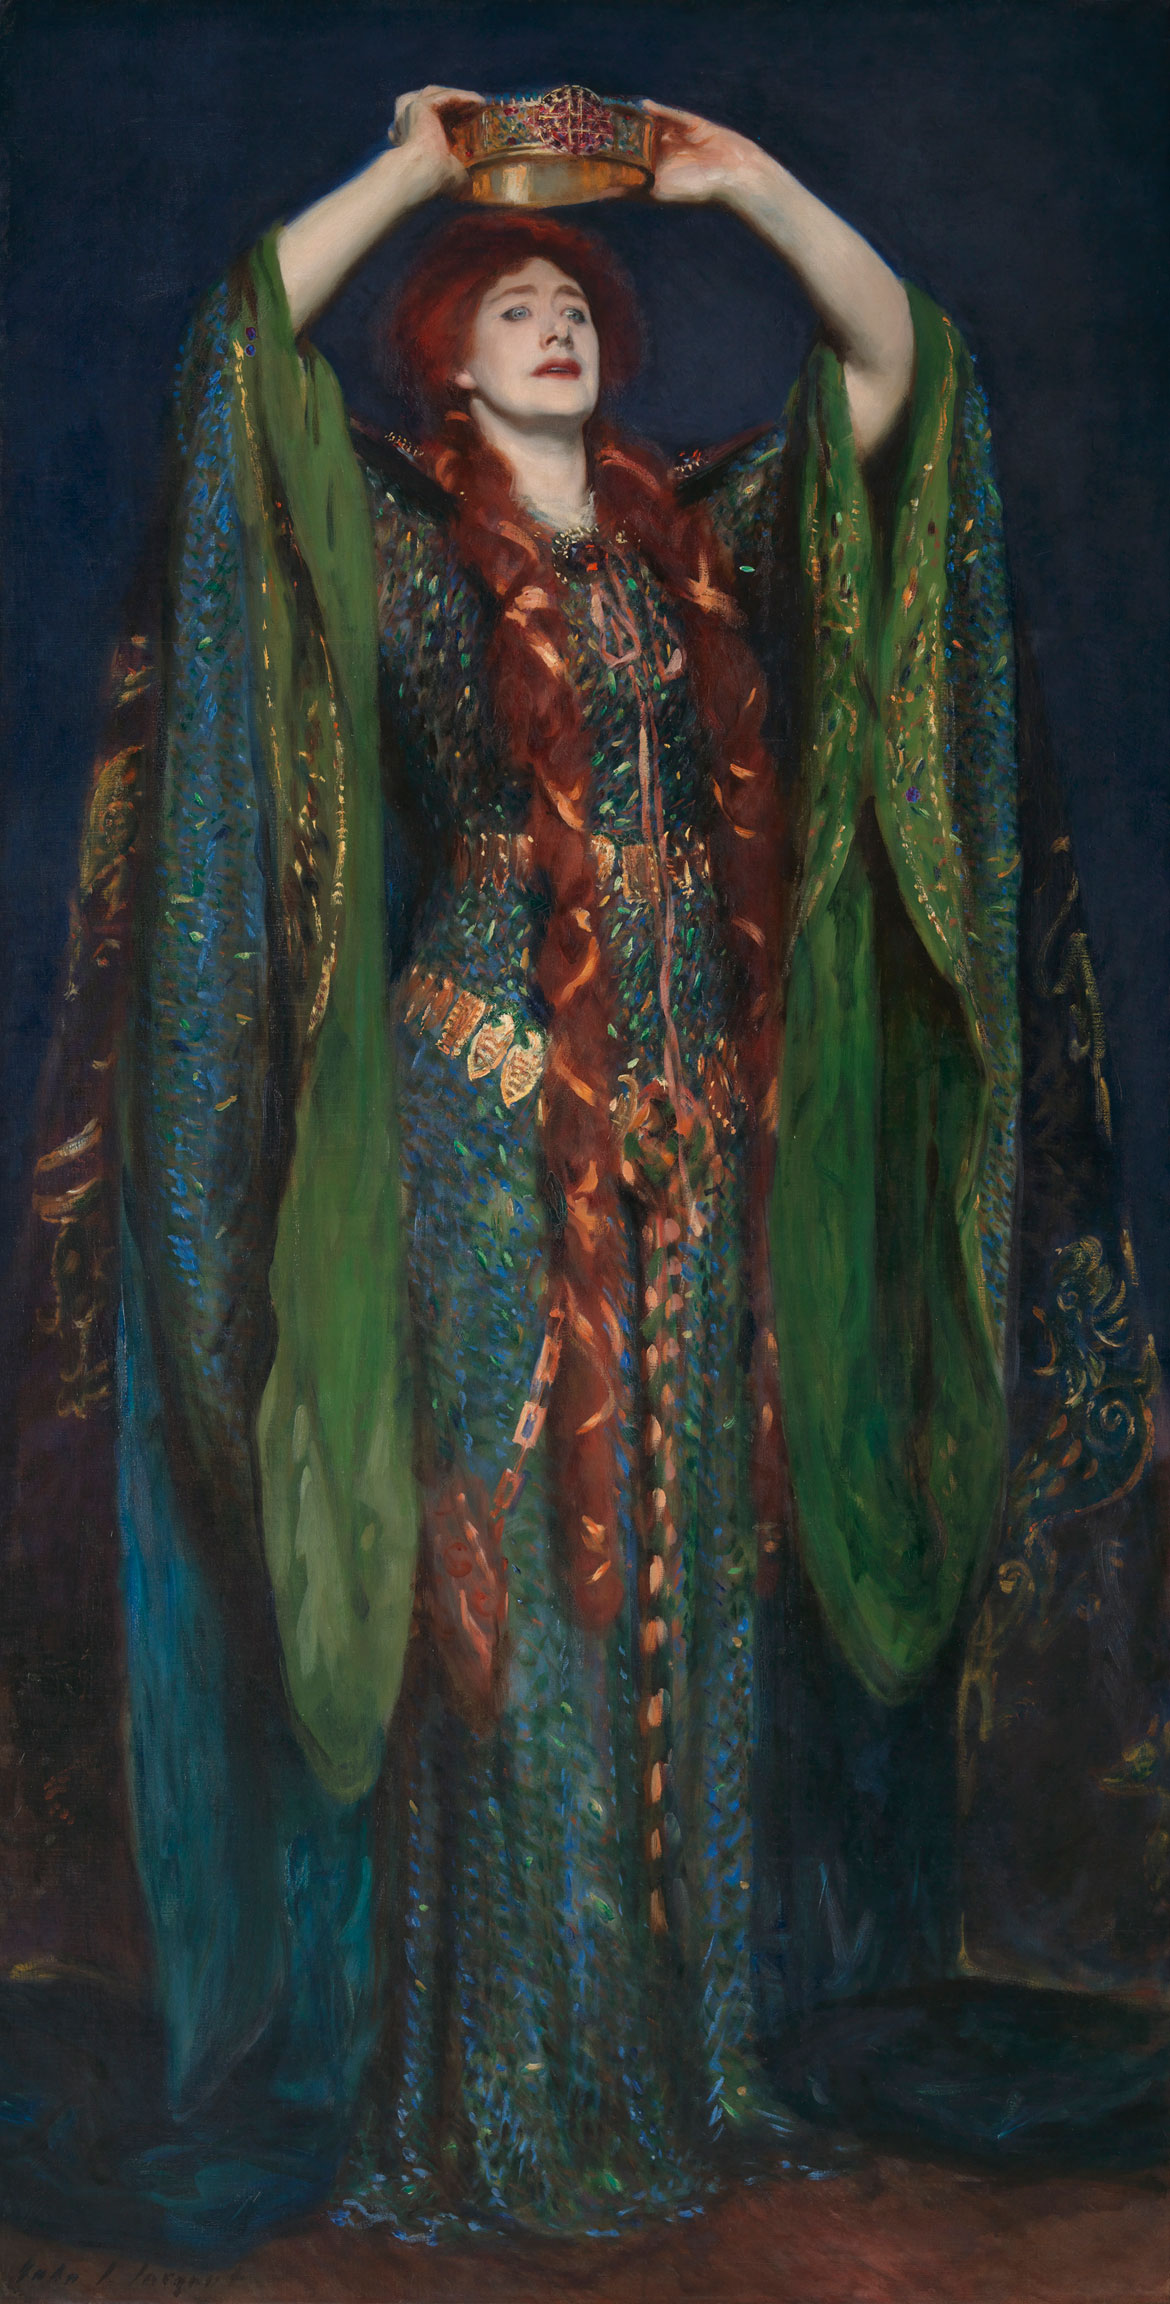 John Singer Sargent, "Ellen Terry as Lady Macbeth," 1889, oil on canvas.